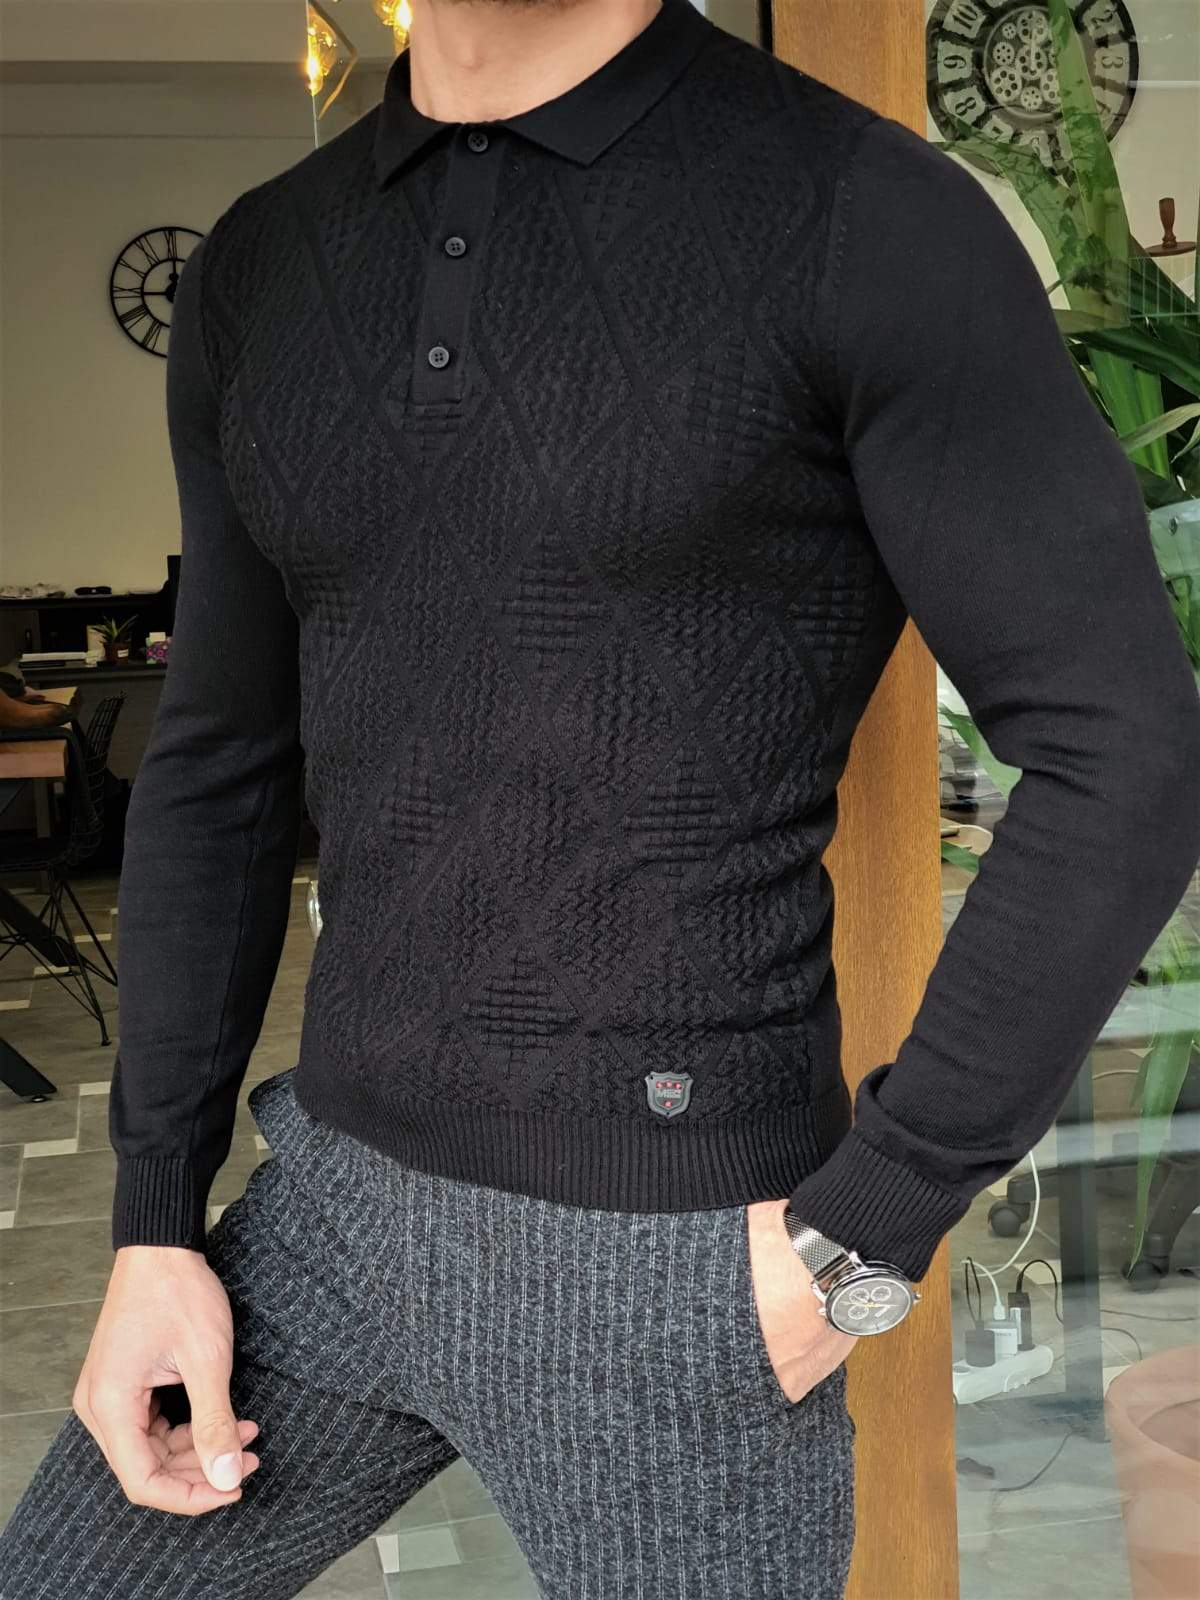 Elko Black Slim Fit Collar Sweater